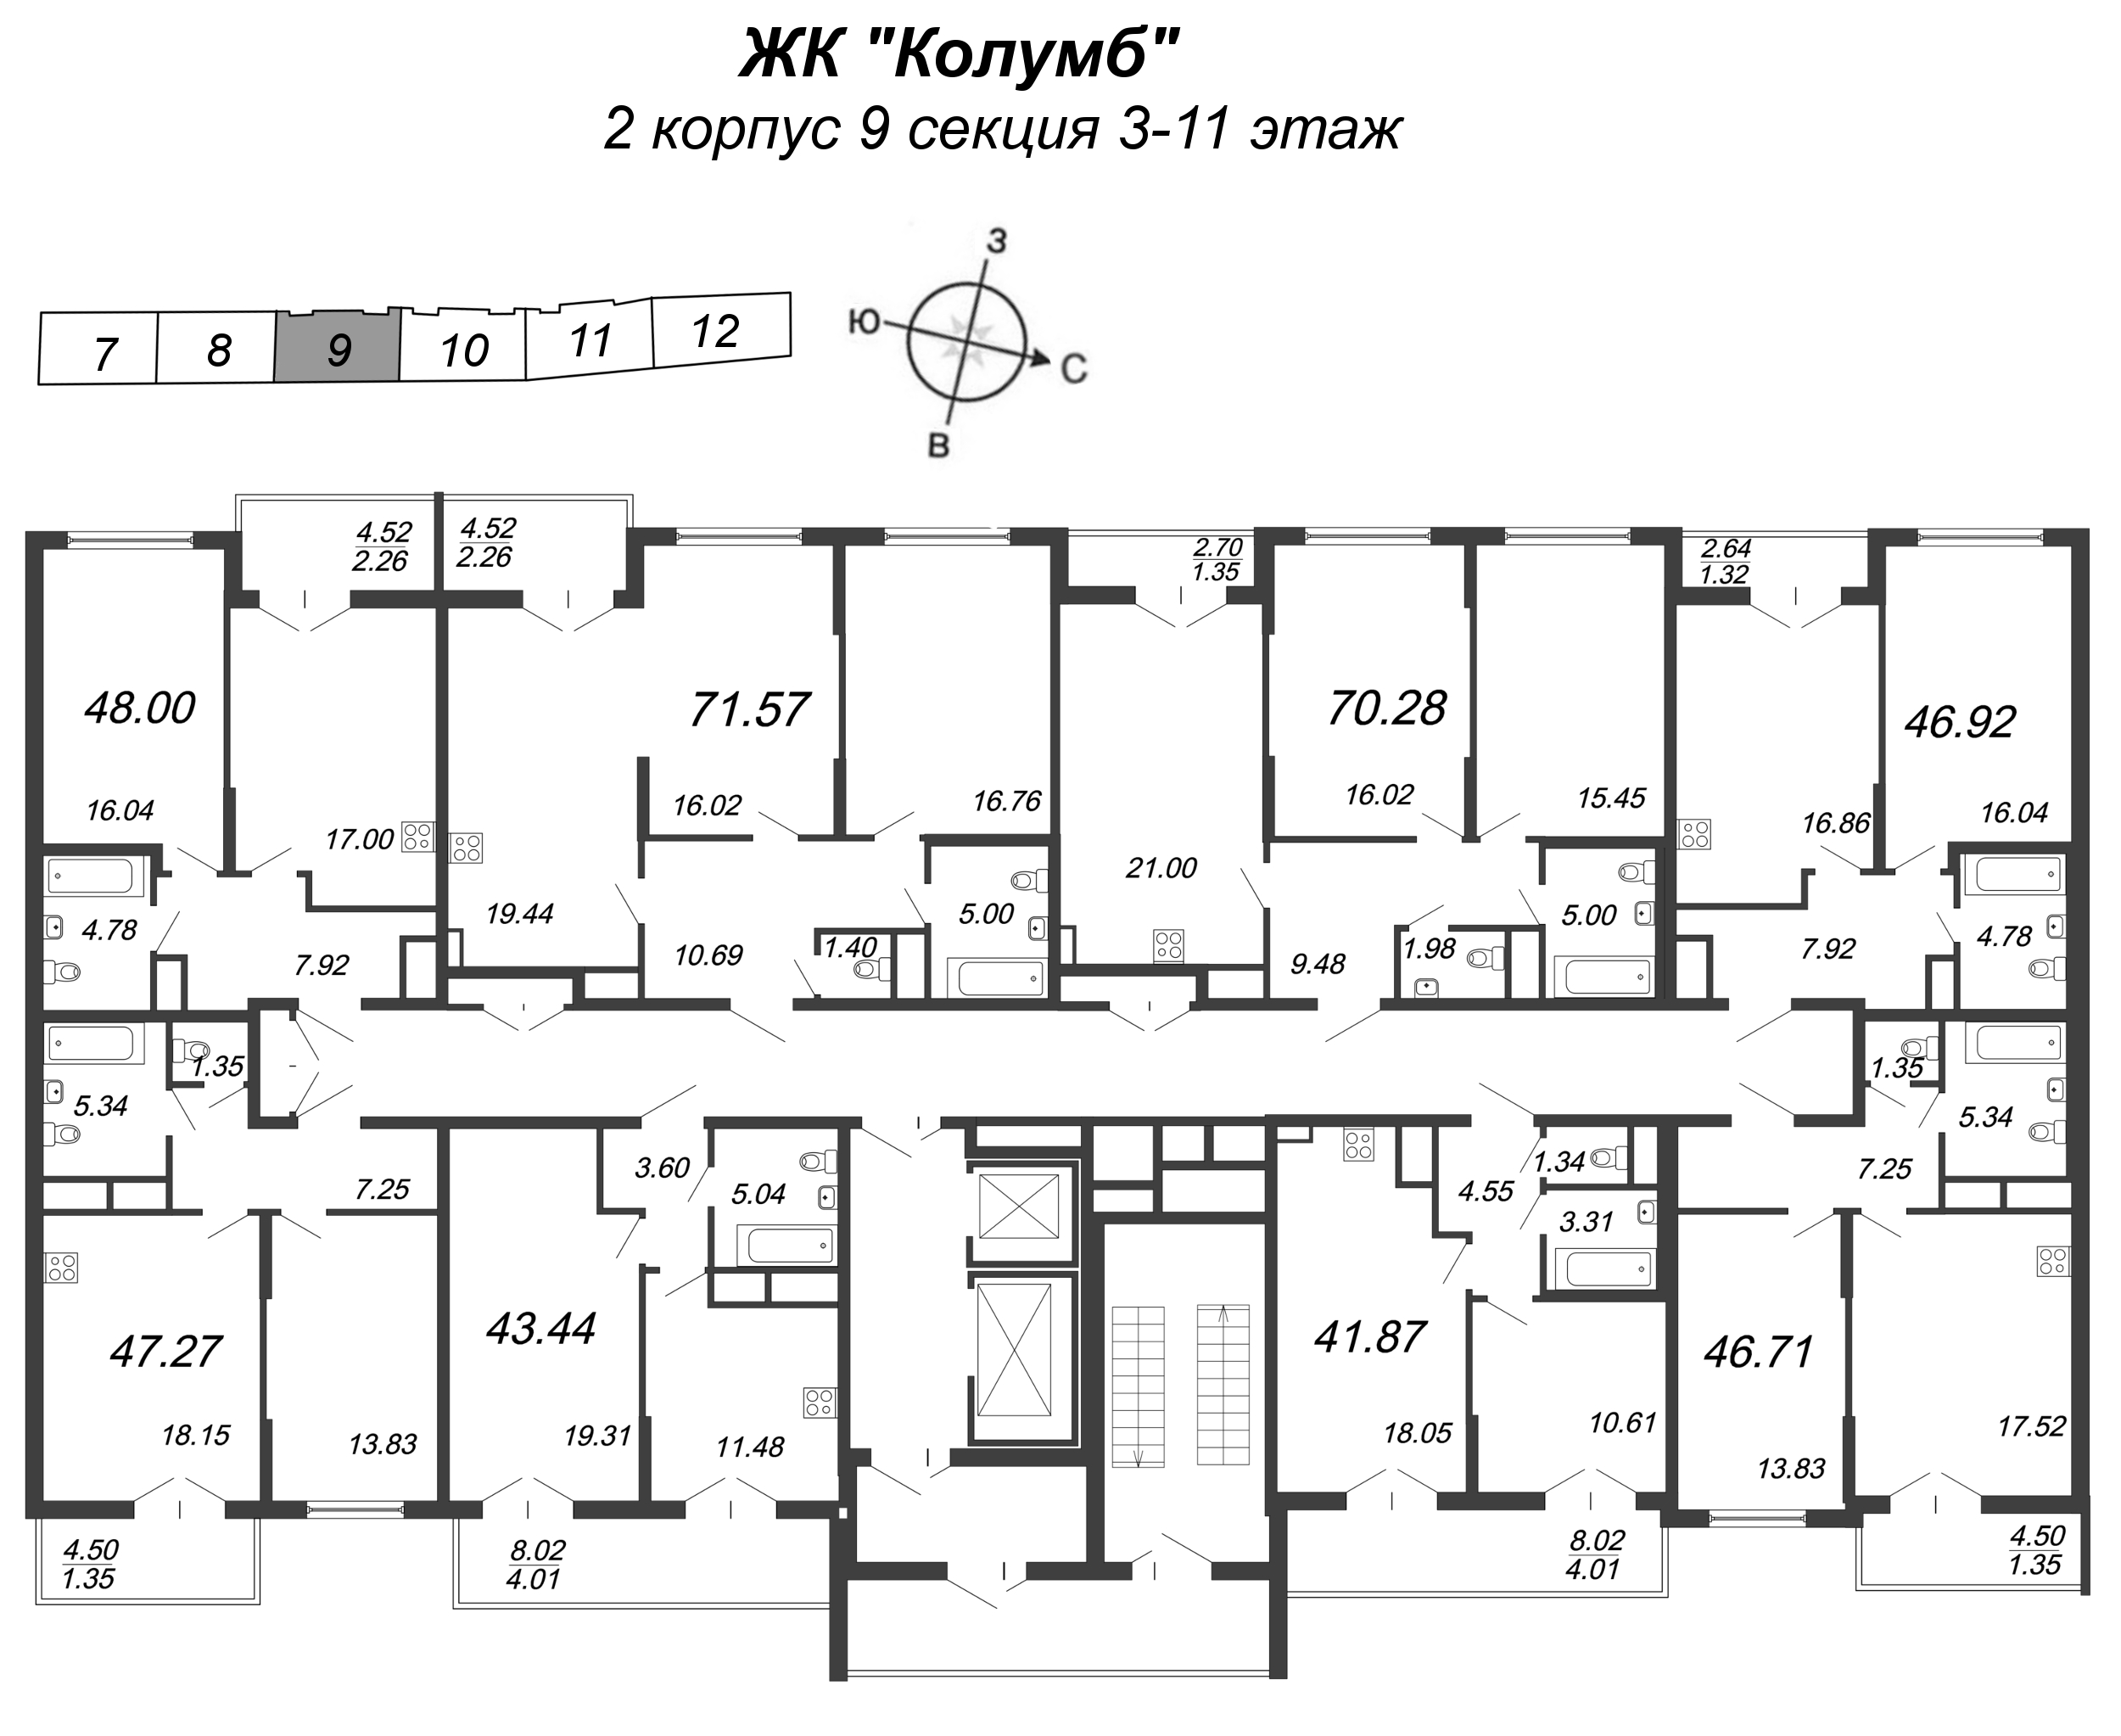 3-комнатная (Евро) квартира, 71.9 м² в ЖК "Колумб" - планировка этажа